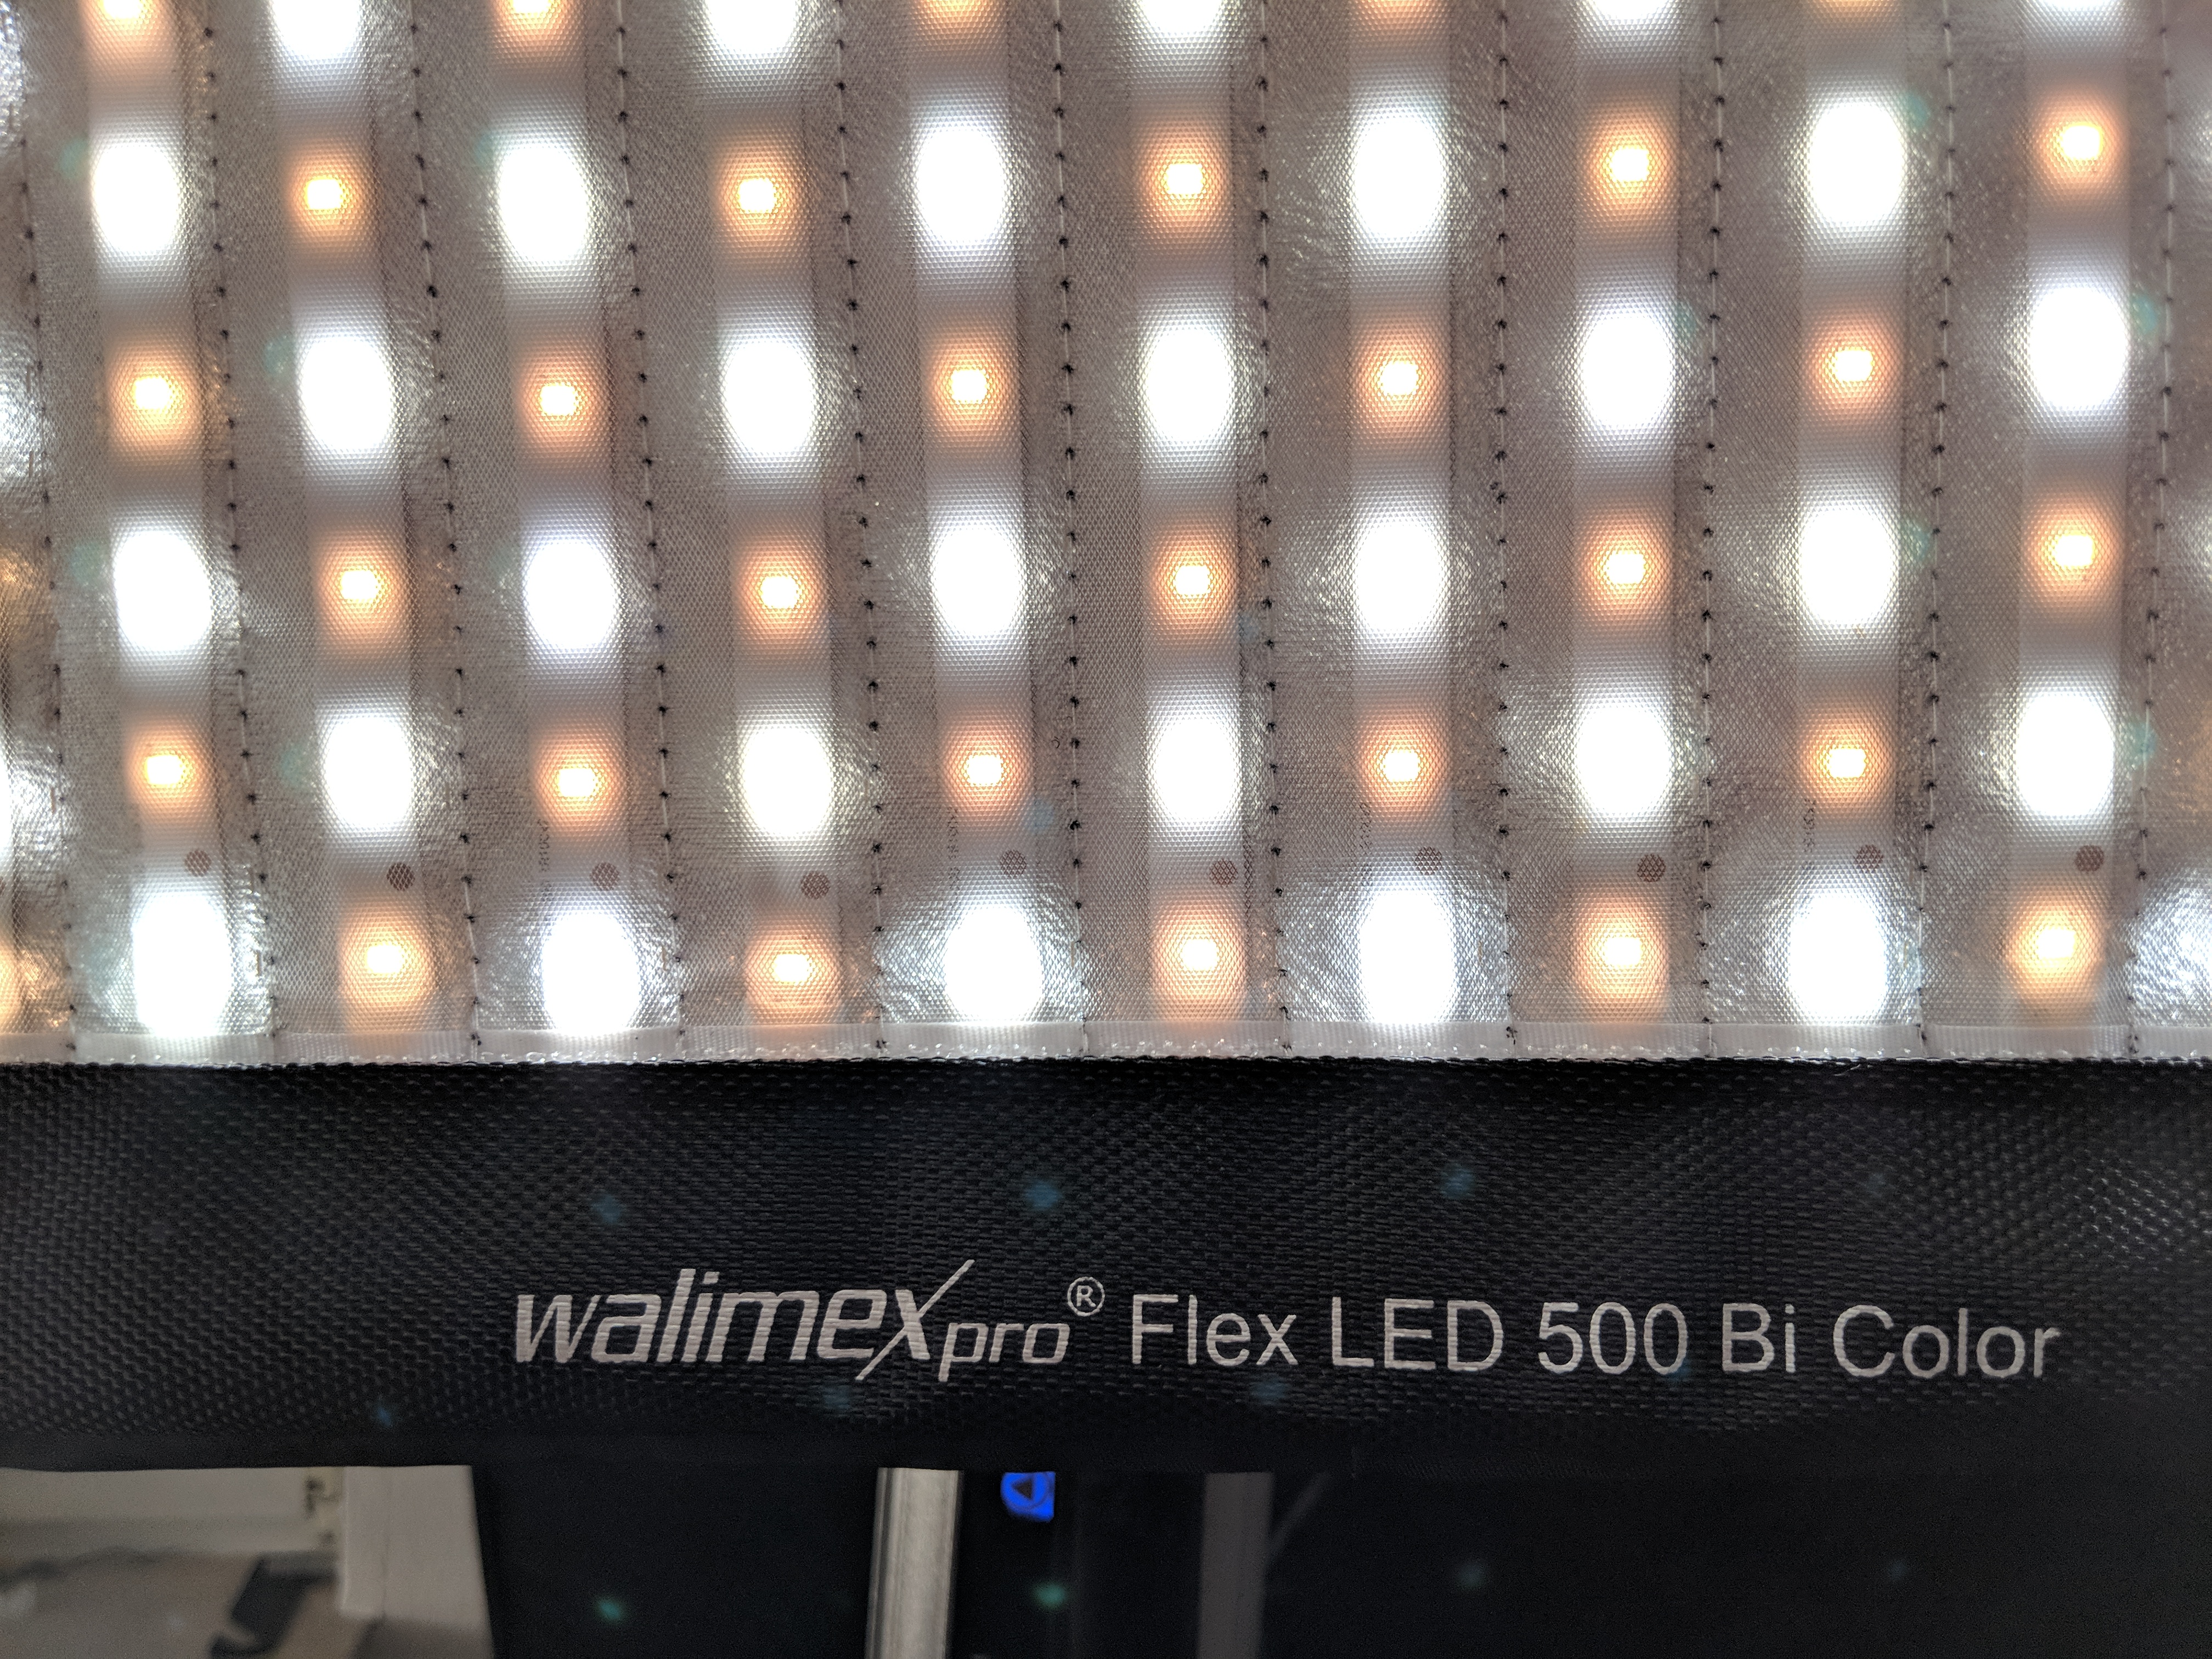 Walimex pro Flex LED 500 Bi Color